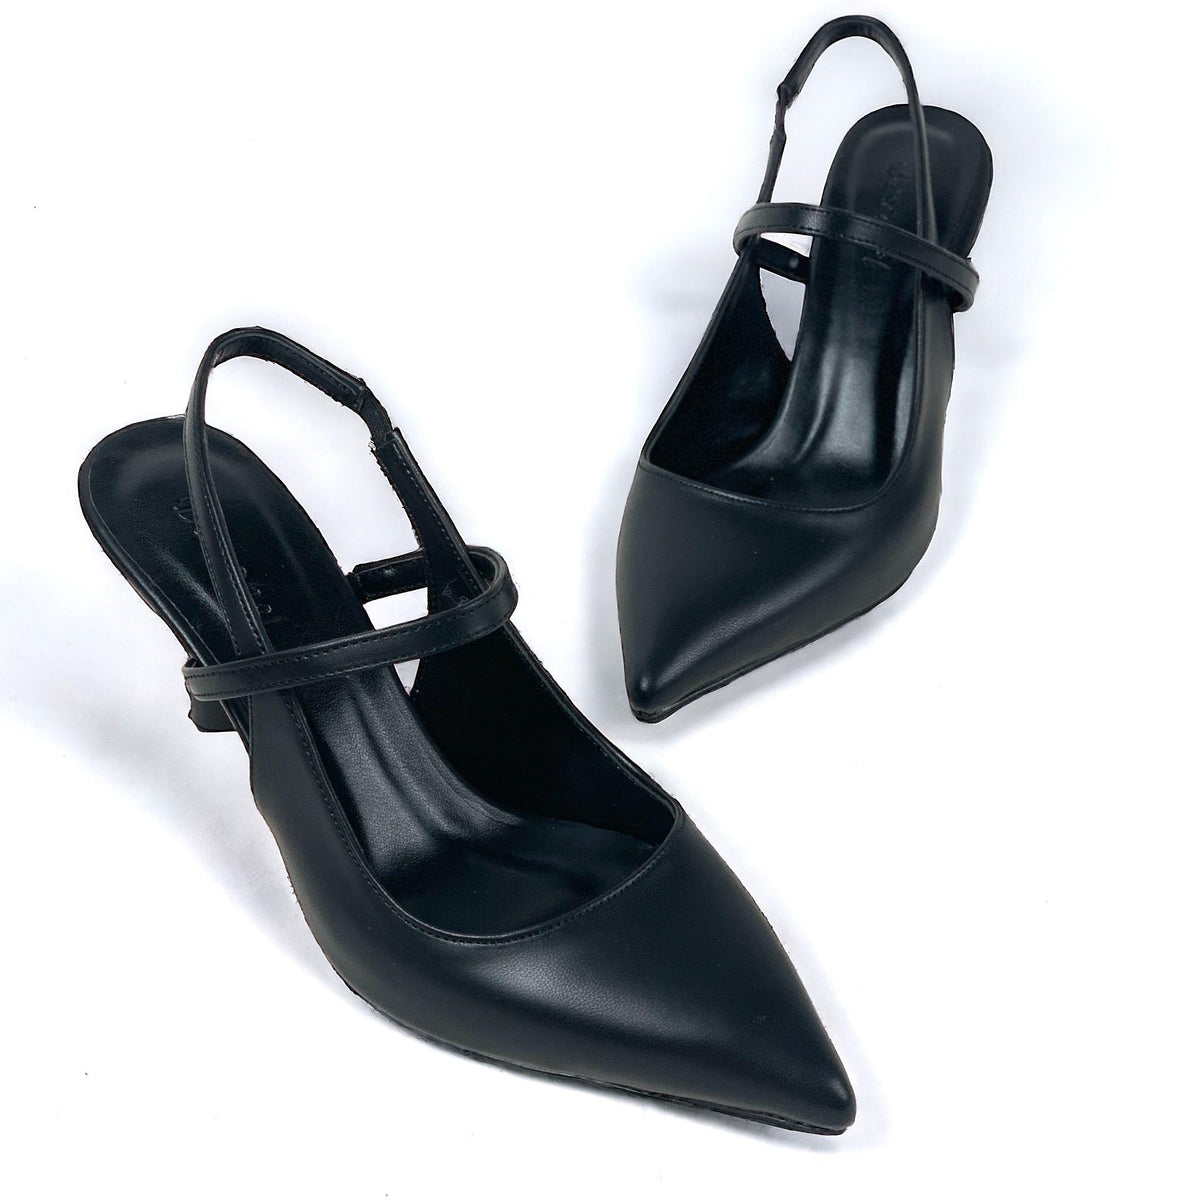 Olvan Black Skin Thin Heel Shoes Sandals 7 Cm Heel - STREETMODE™